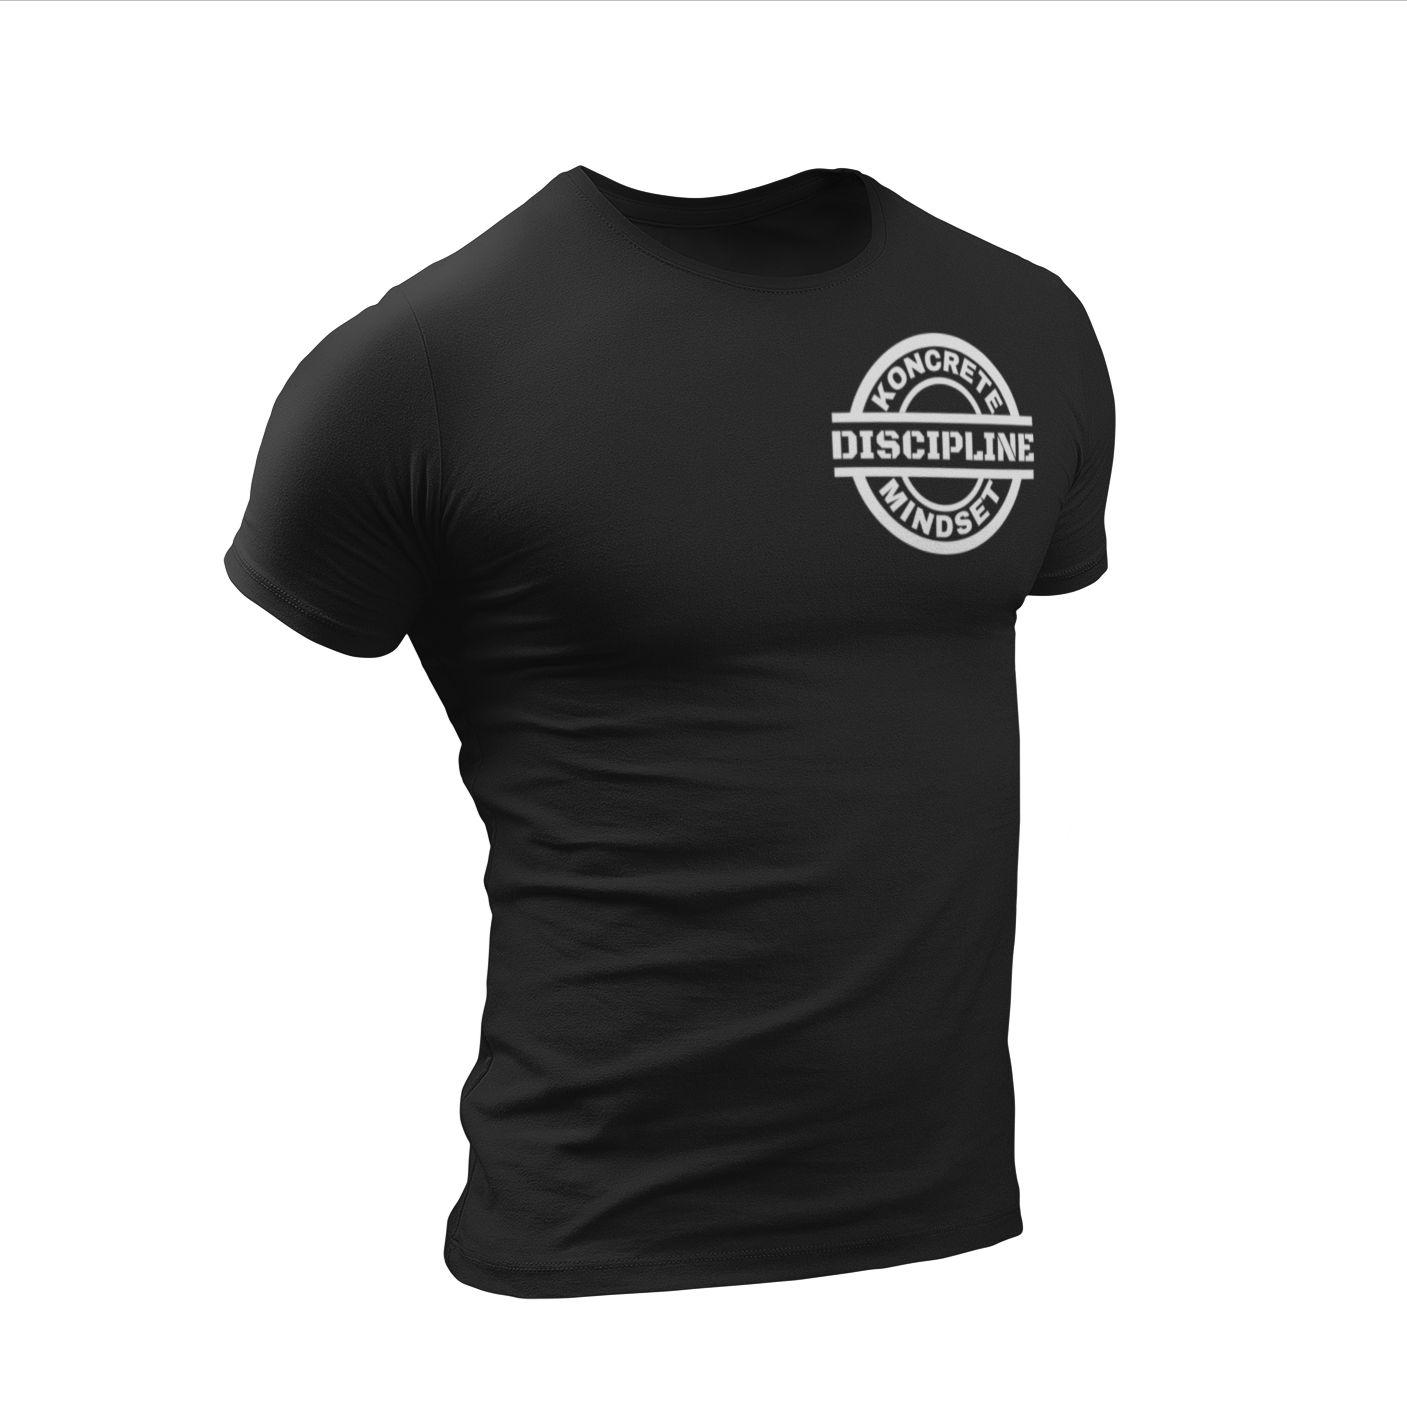 black Koncrete Mindset discipline t-shirt with white design on left chest